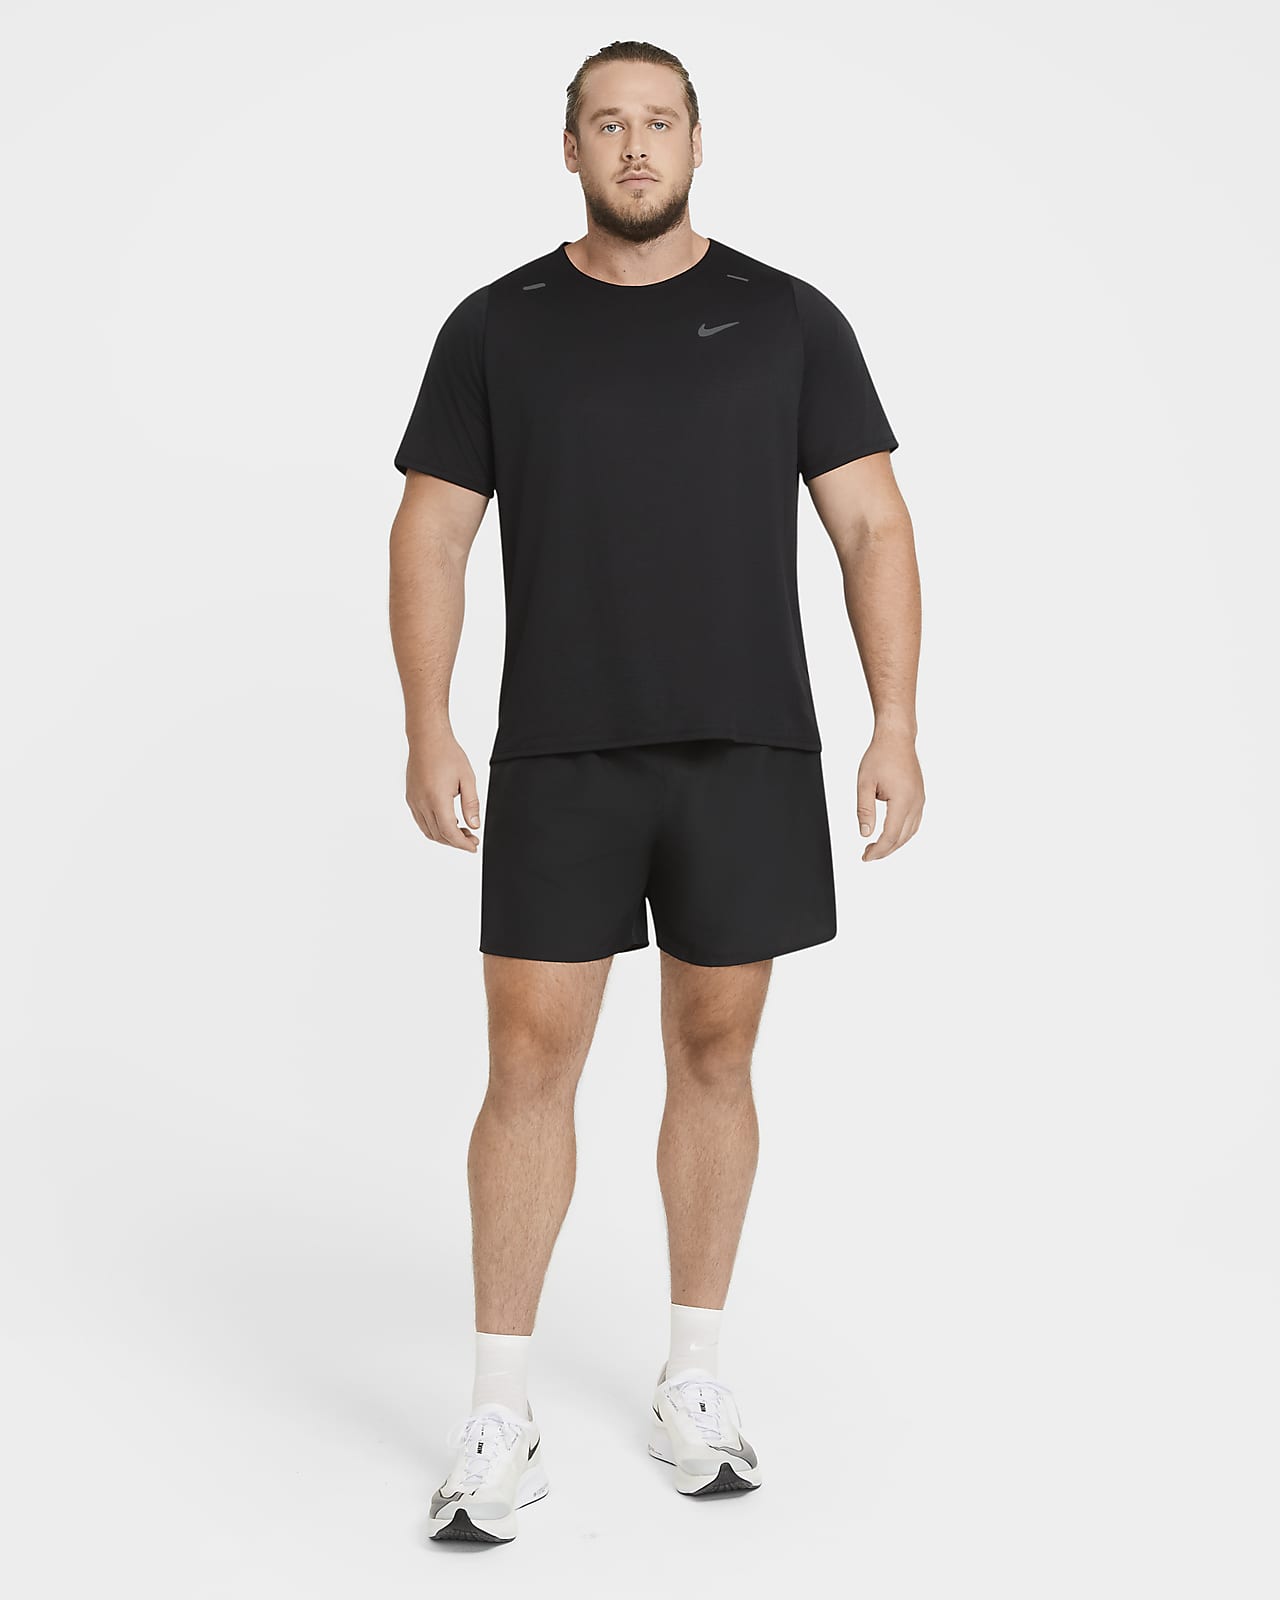 nike jordan shorts sale